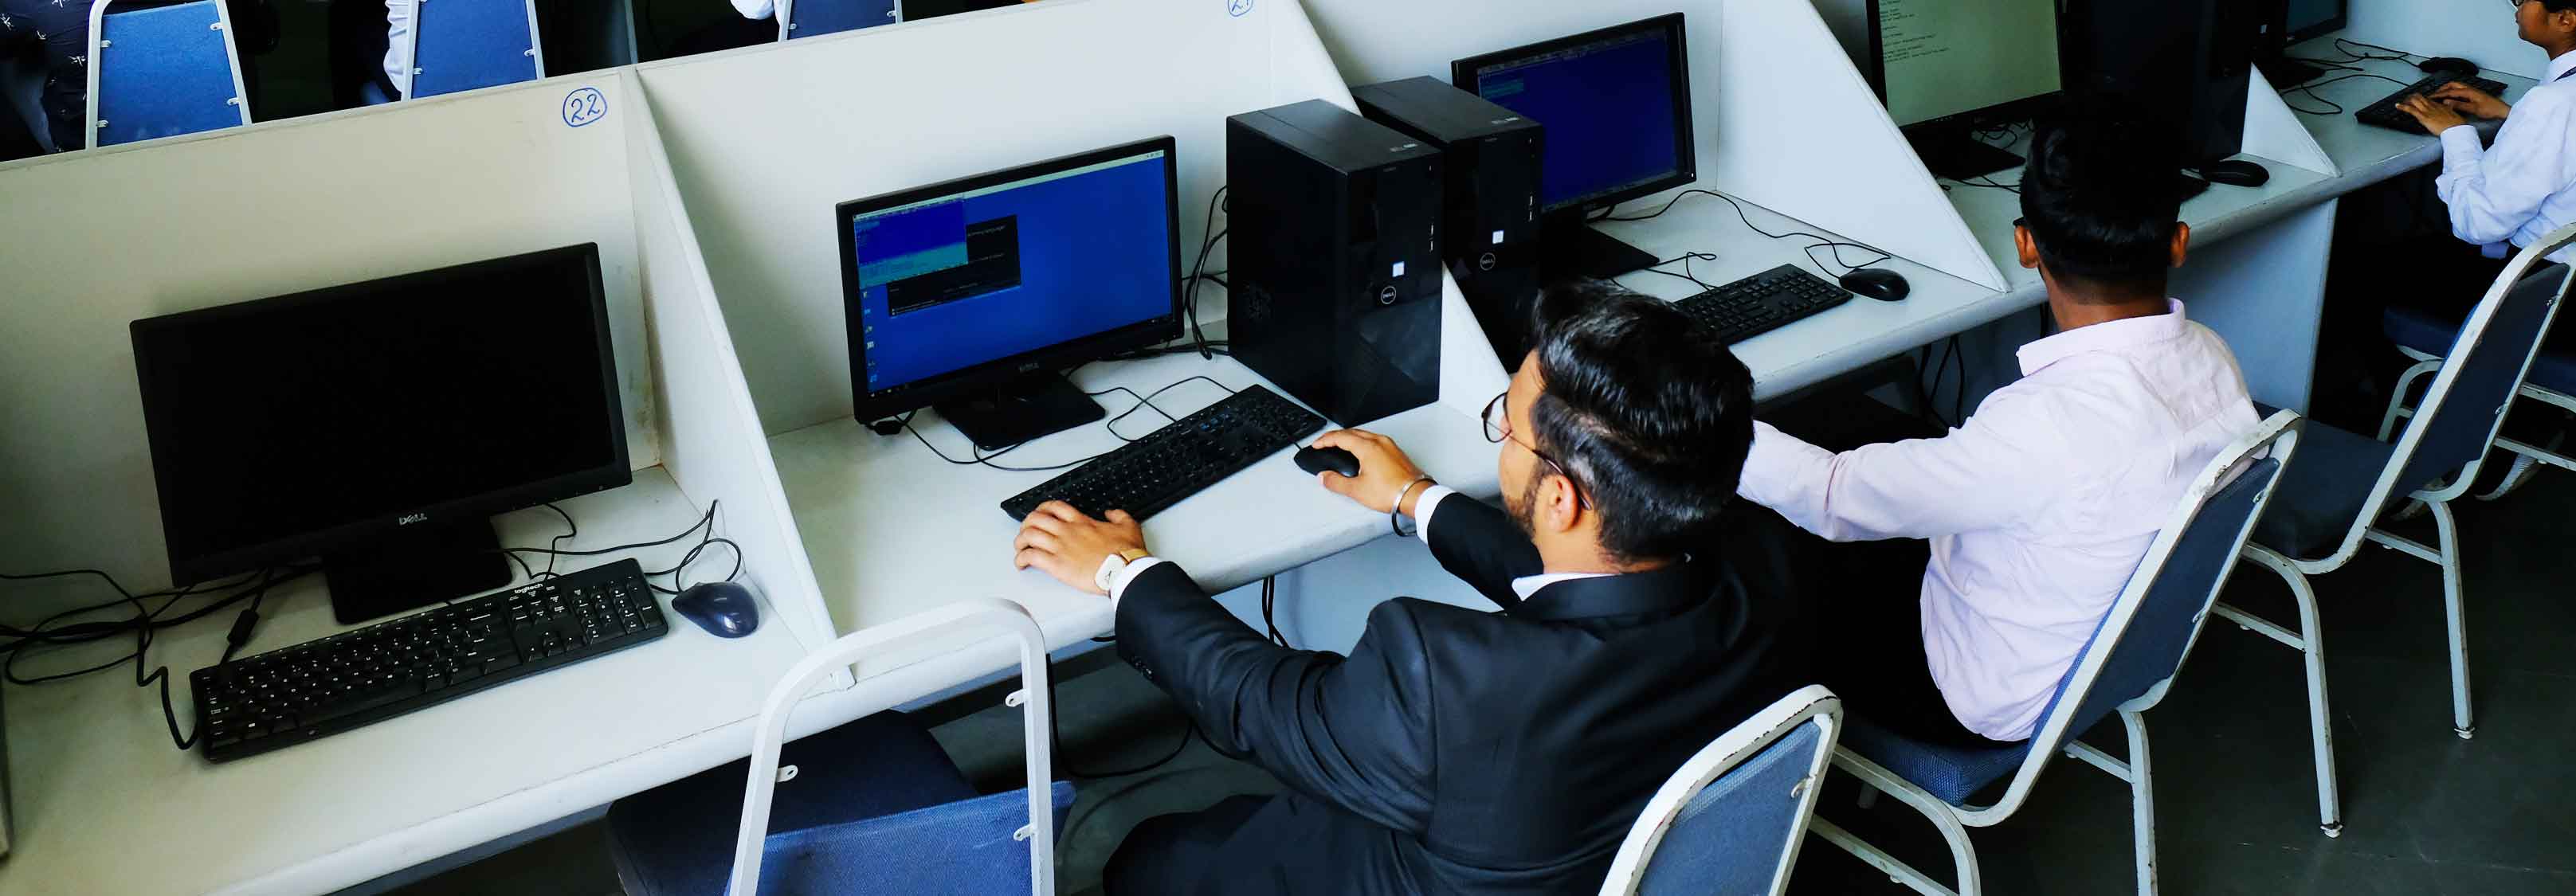 Best Computer Science Courses in Gurgaon, Delhi NCR - Starex University